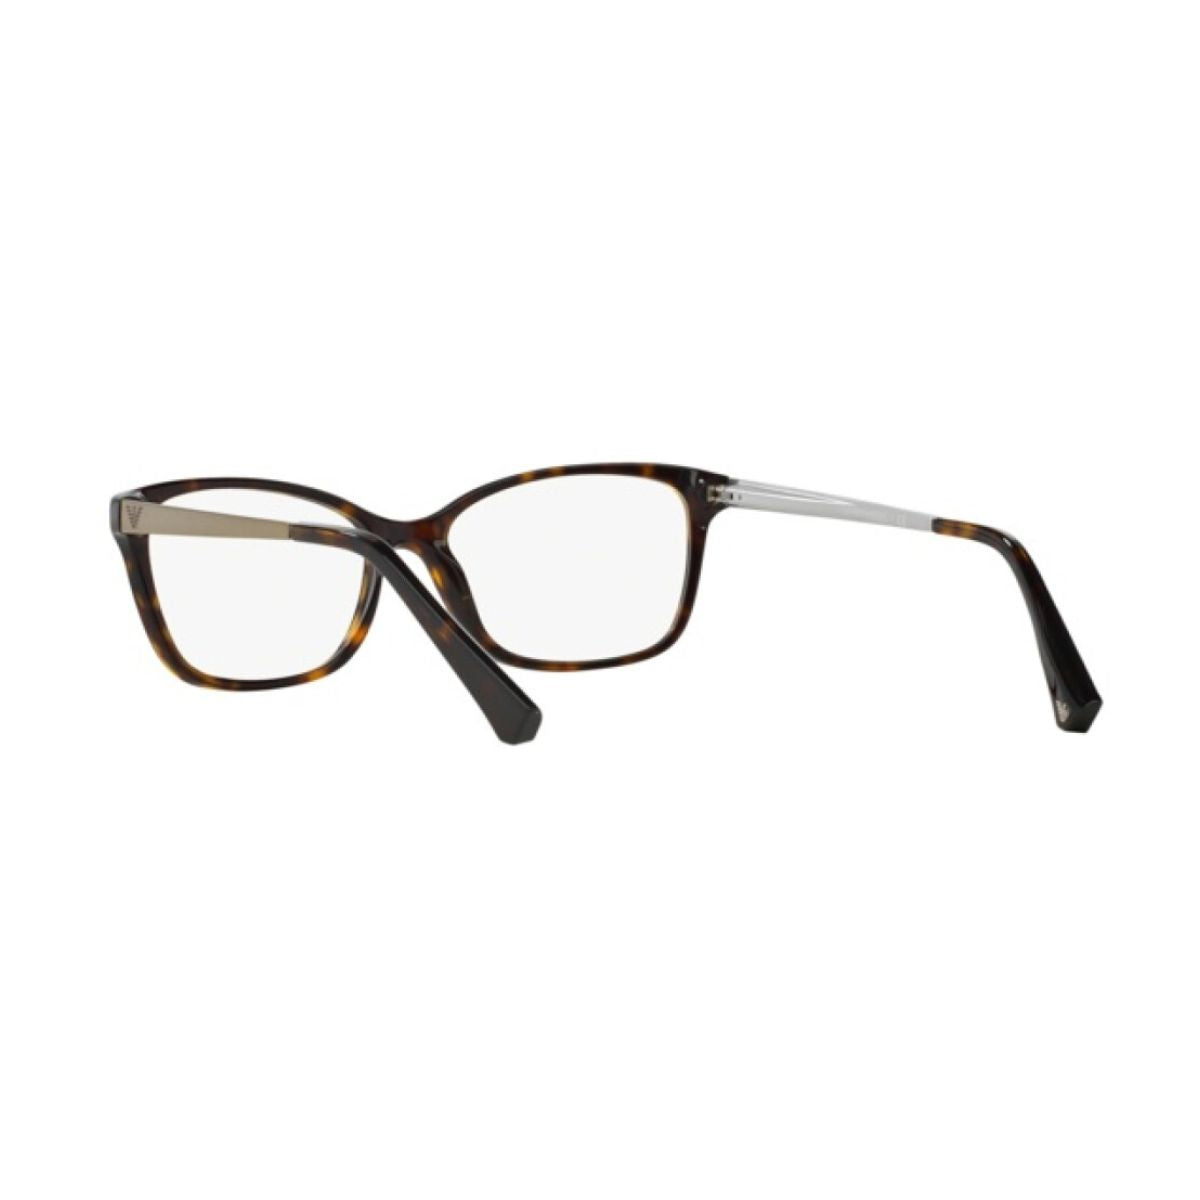 "stylish Emporio Armani 3026 5026 eyesight glasses frame for women's at optorium"